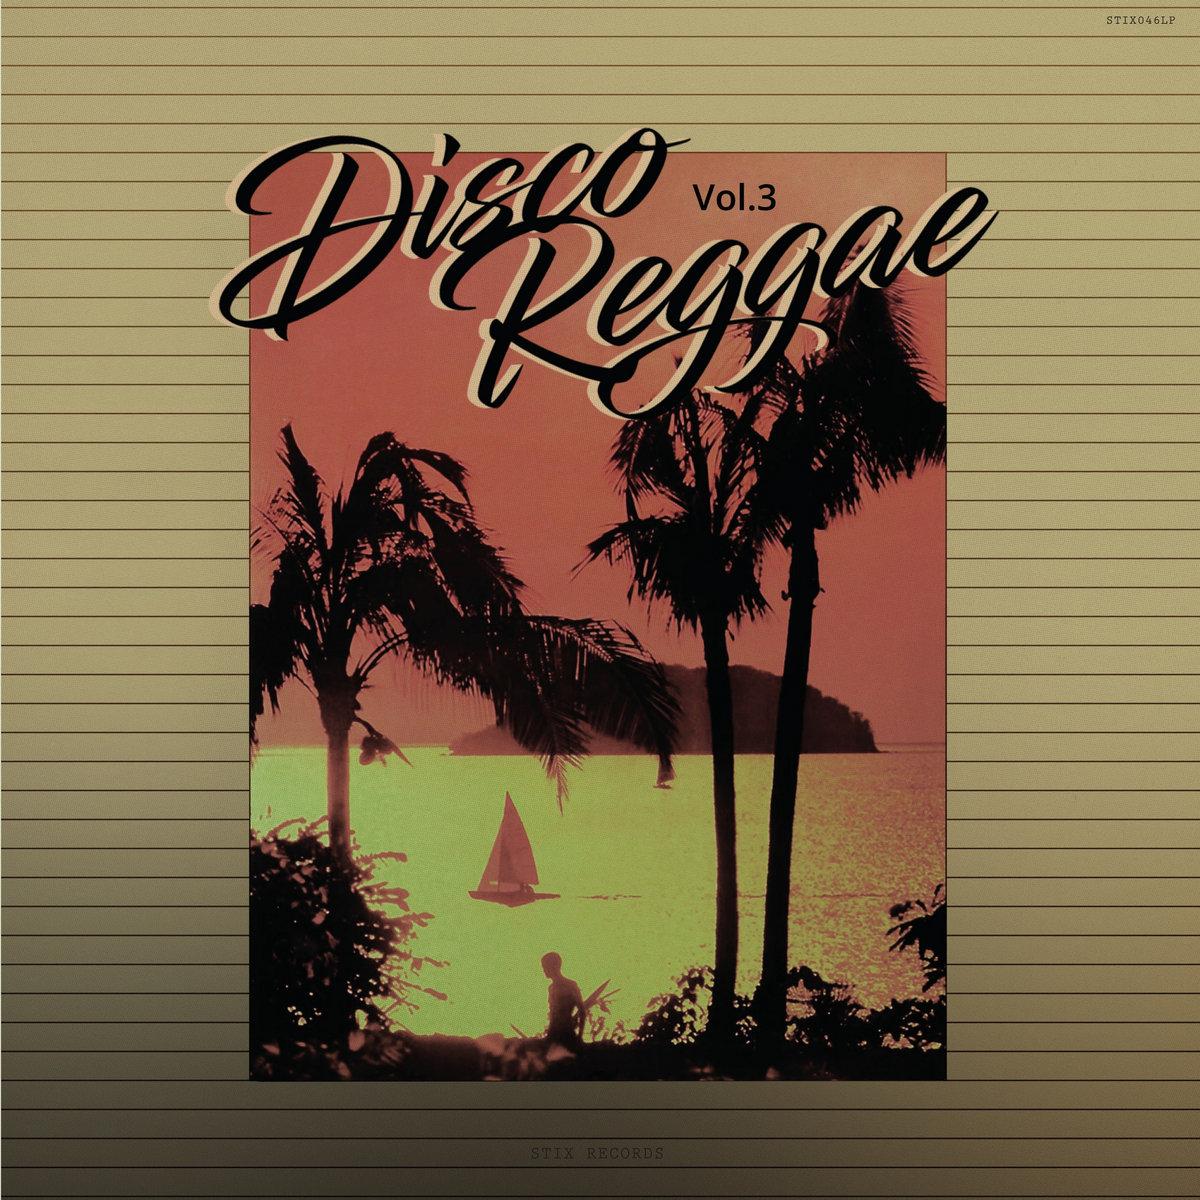 VARIOUS ARTISTS - Disco reggae Vol.3